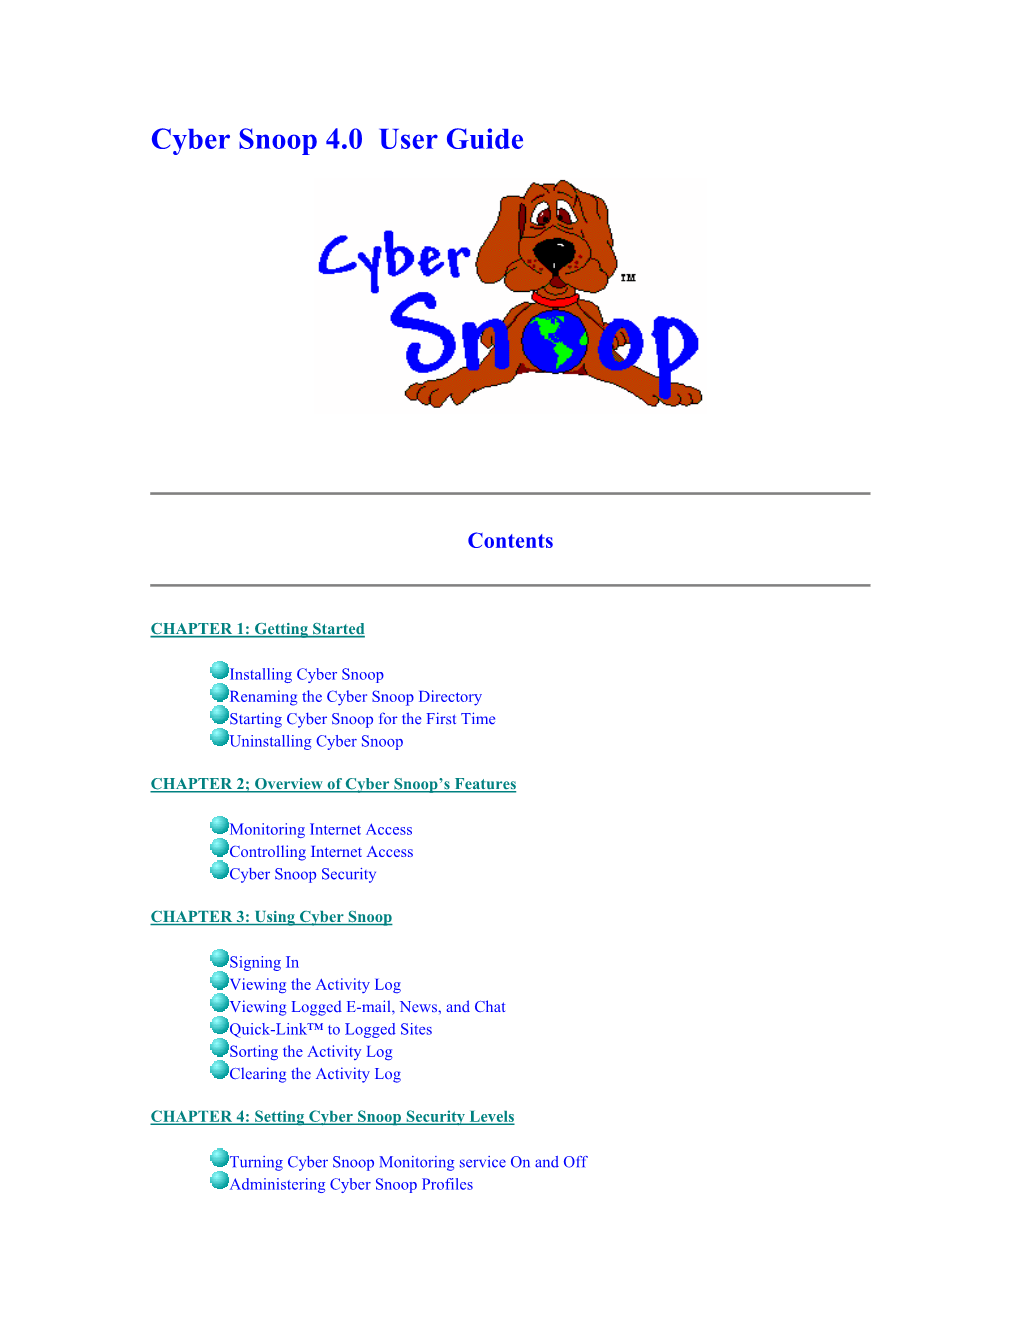 Cyber Snoop User Guide